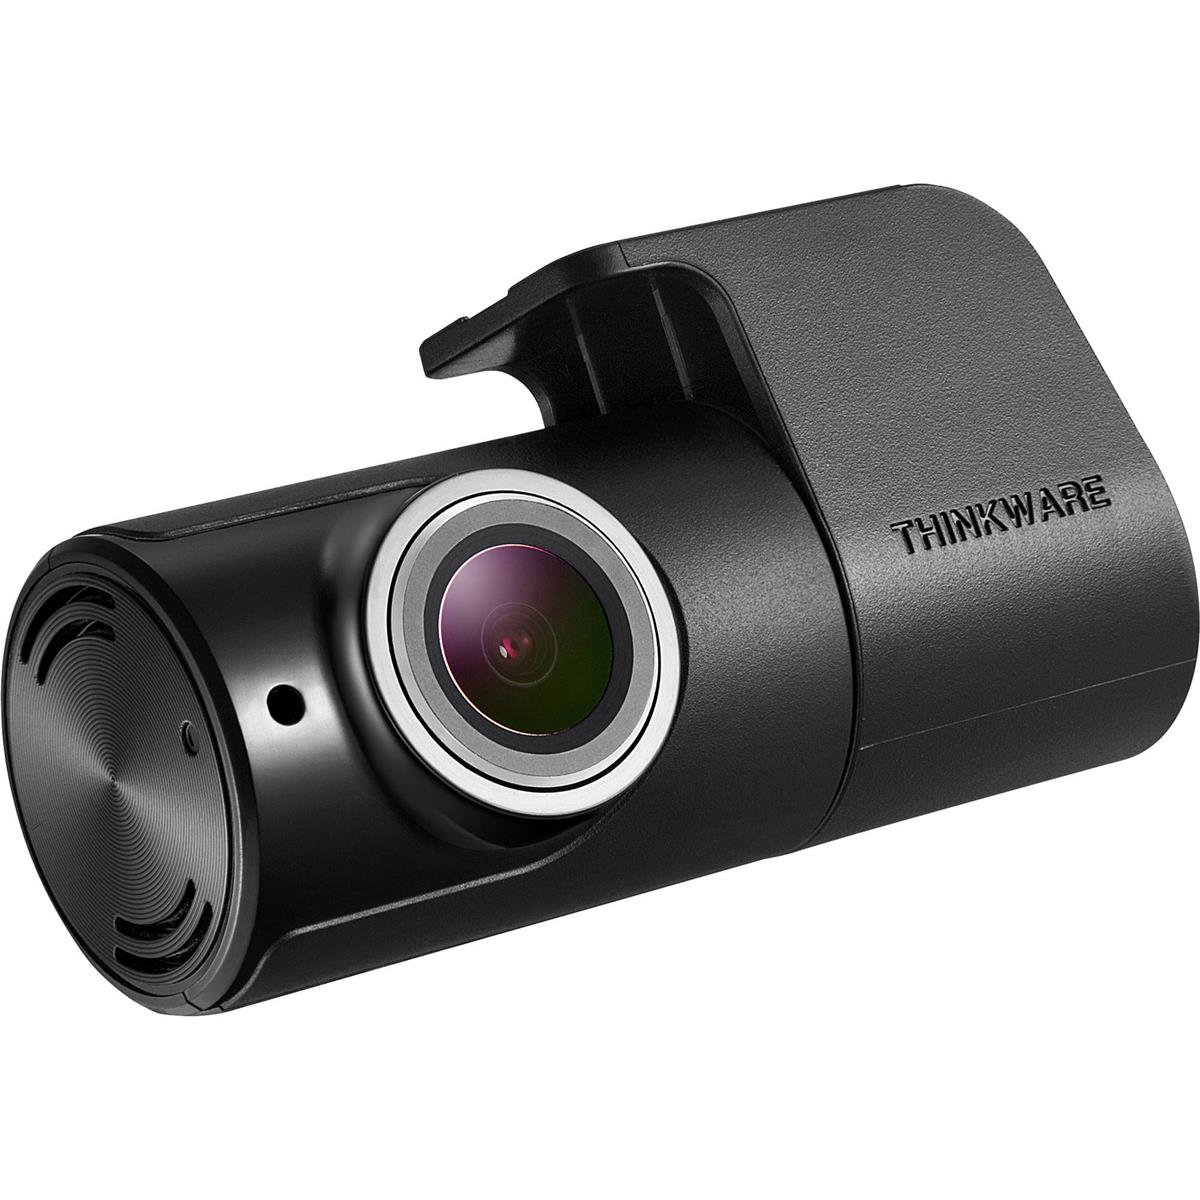 Image of Thinkware 2K Rear View Camera for U1000 Dash Camera